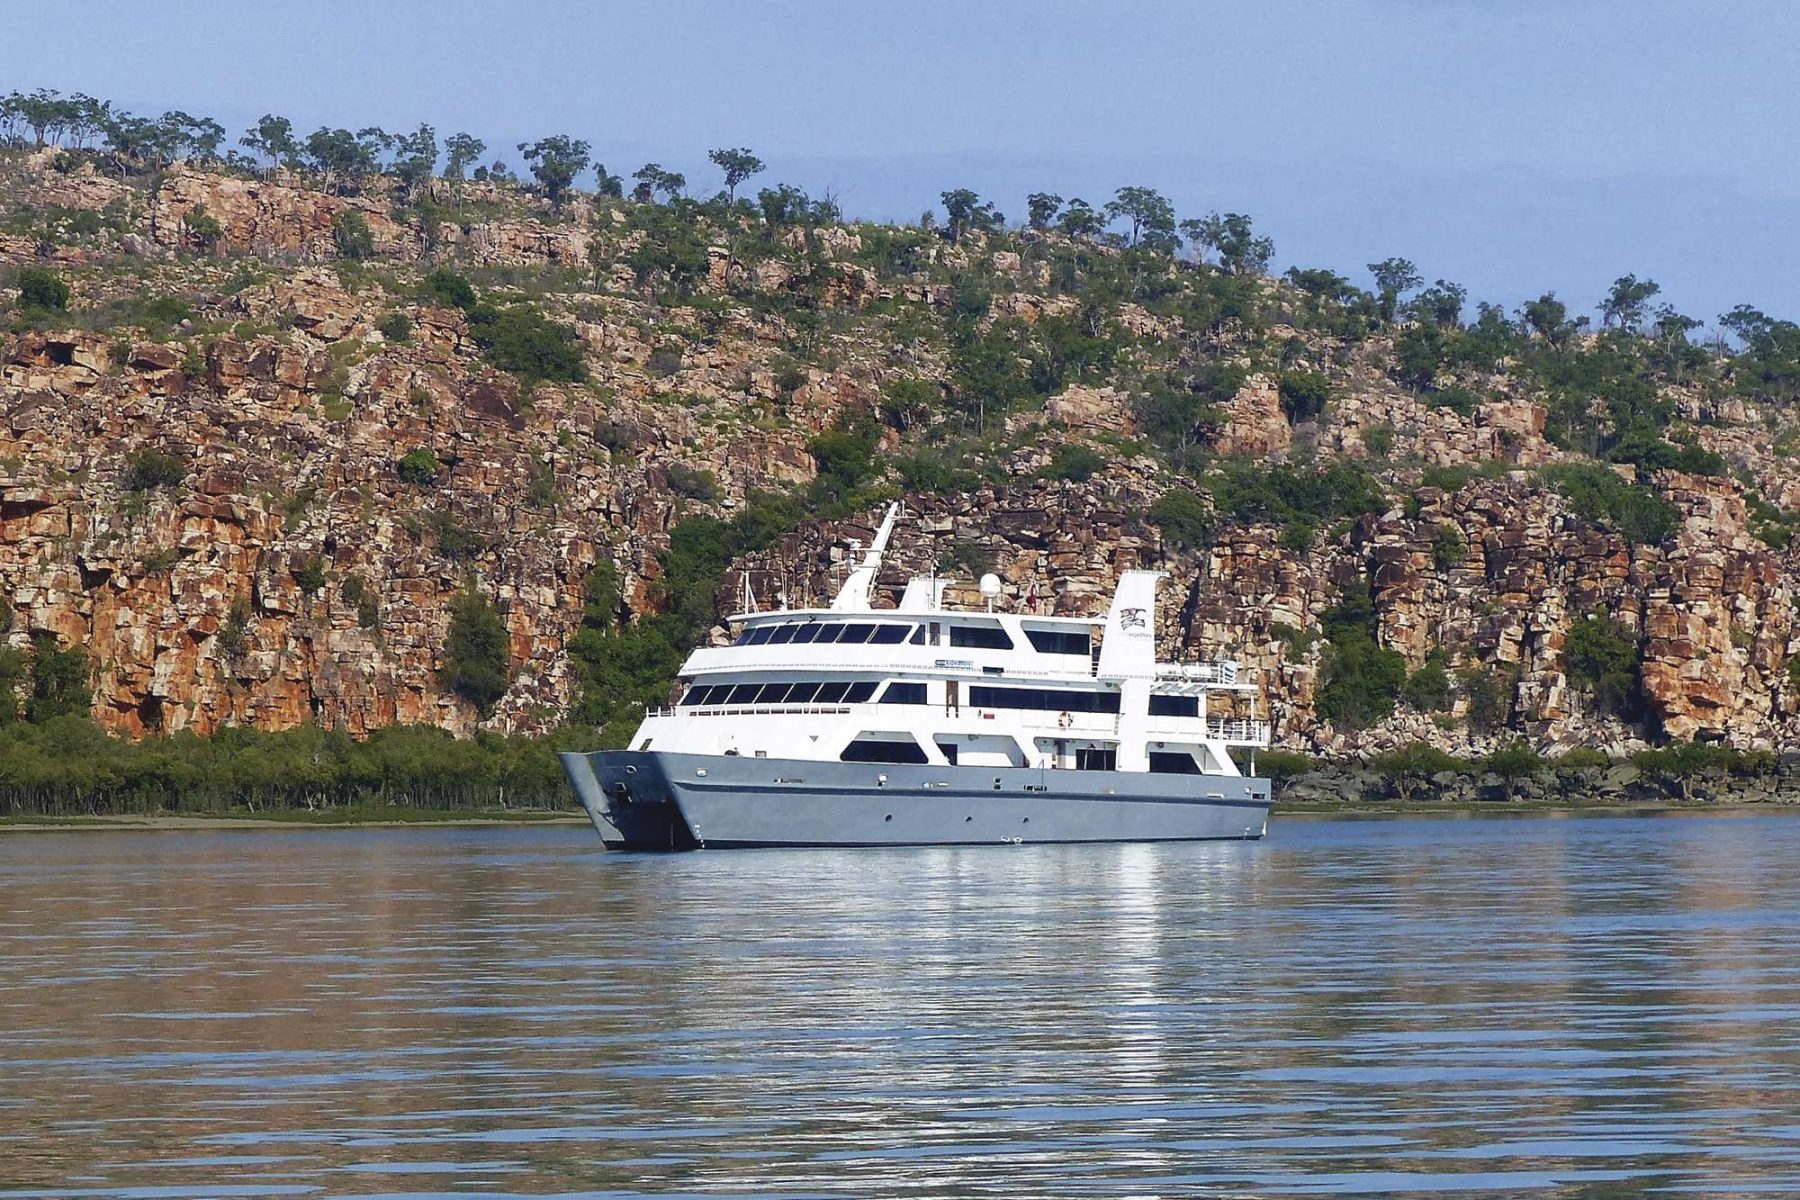 coral expeditions I ship exterior at kimberleys